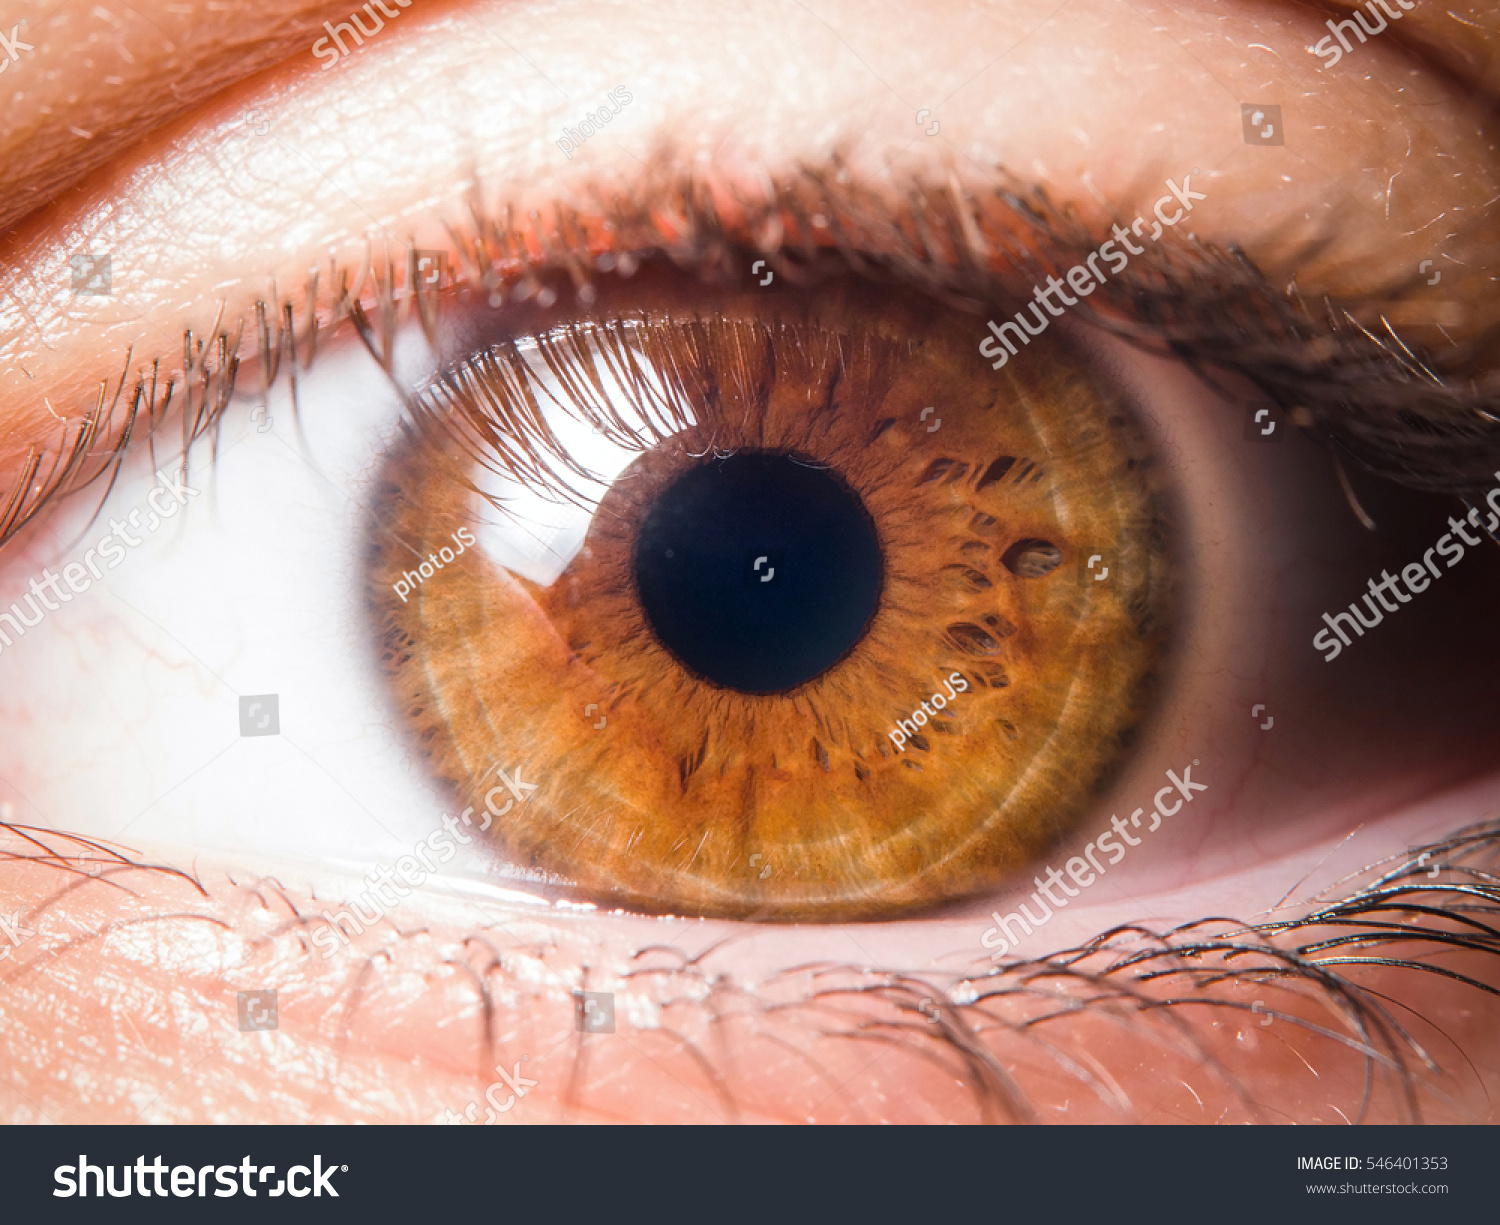 Замечайте Цвет Глаз Человека При Знакомстве